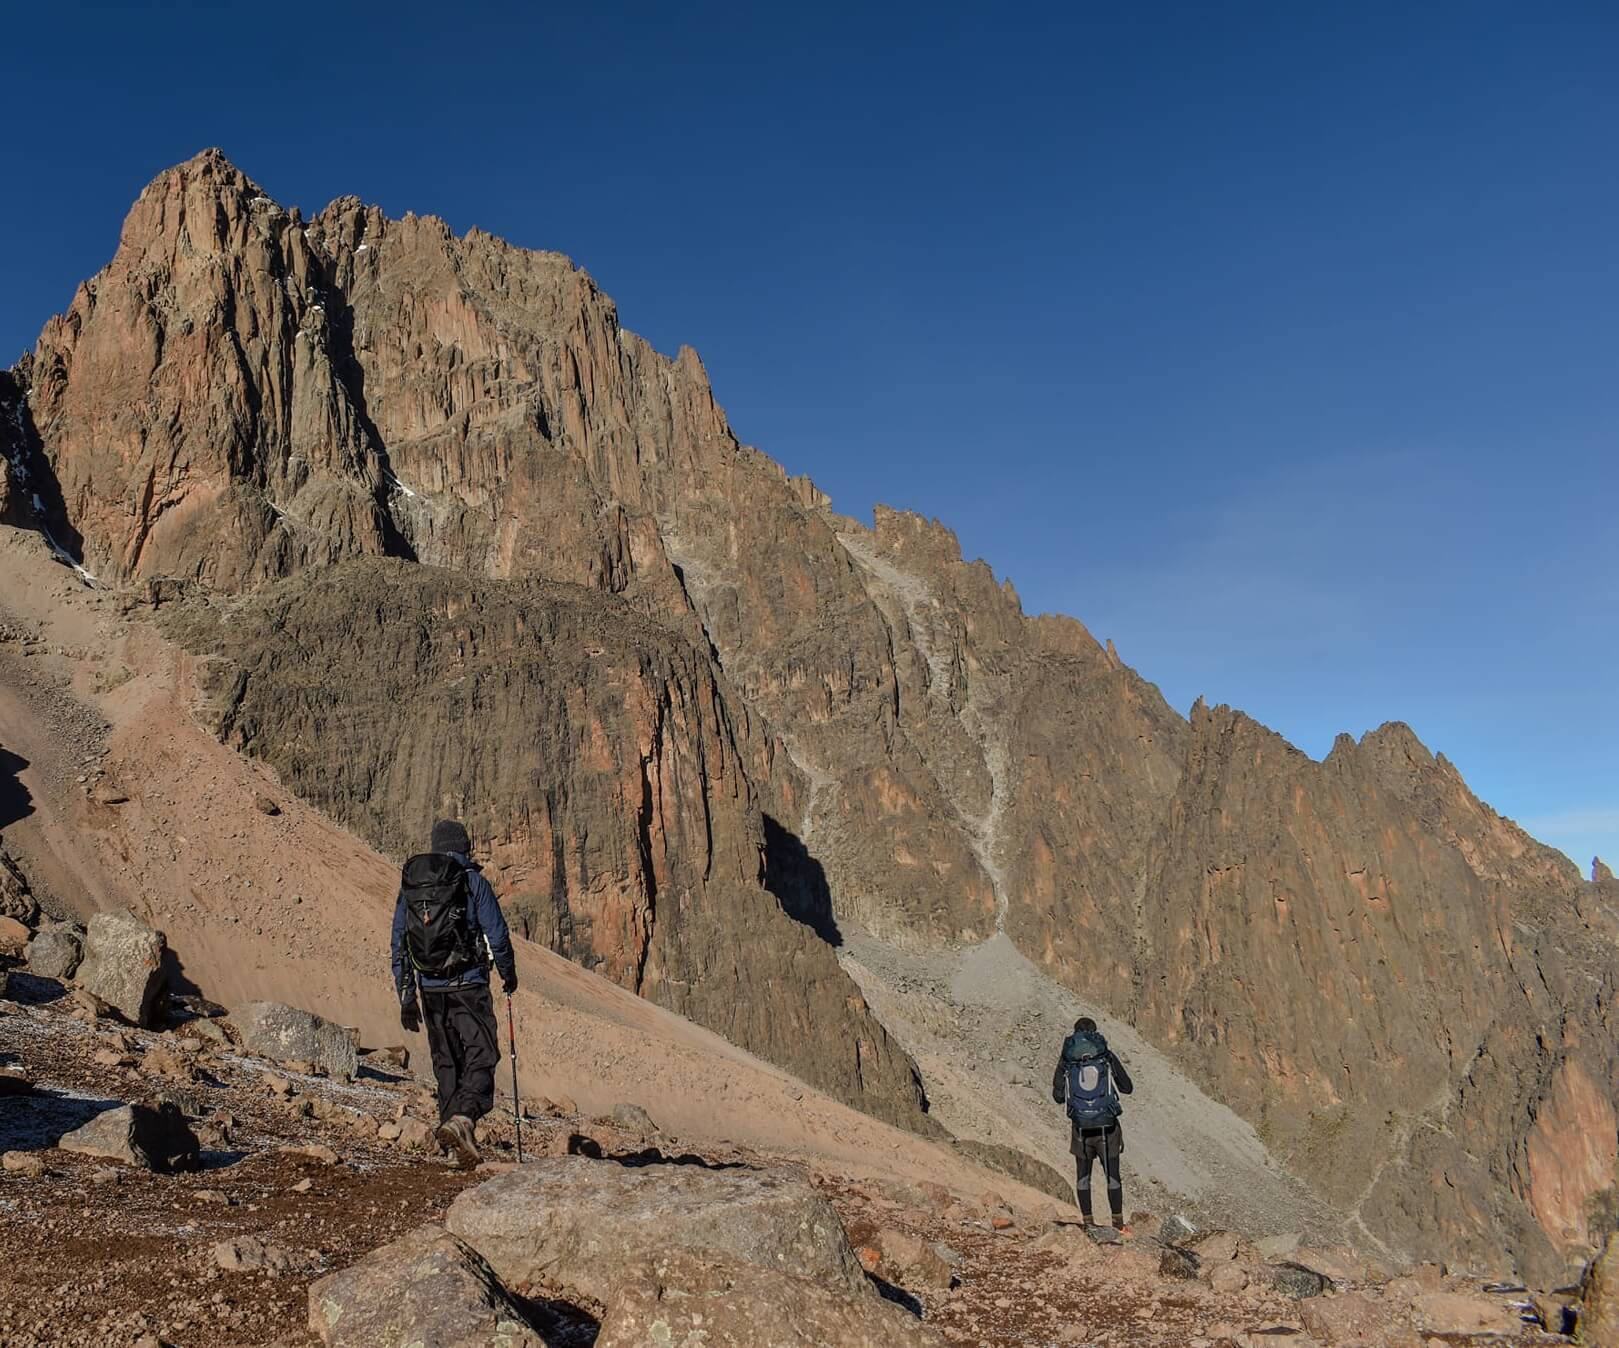 Mount Kenya volcanic peaks